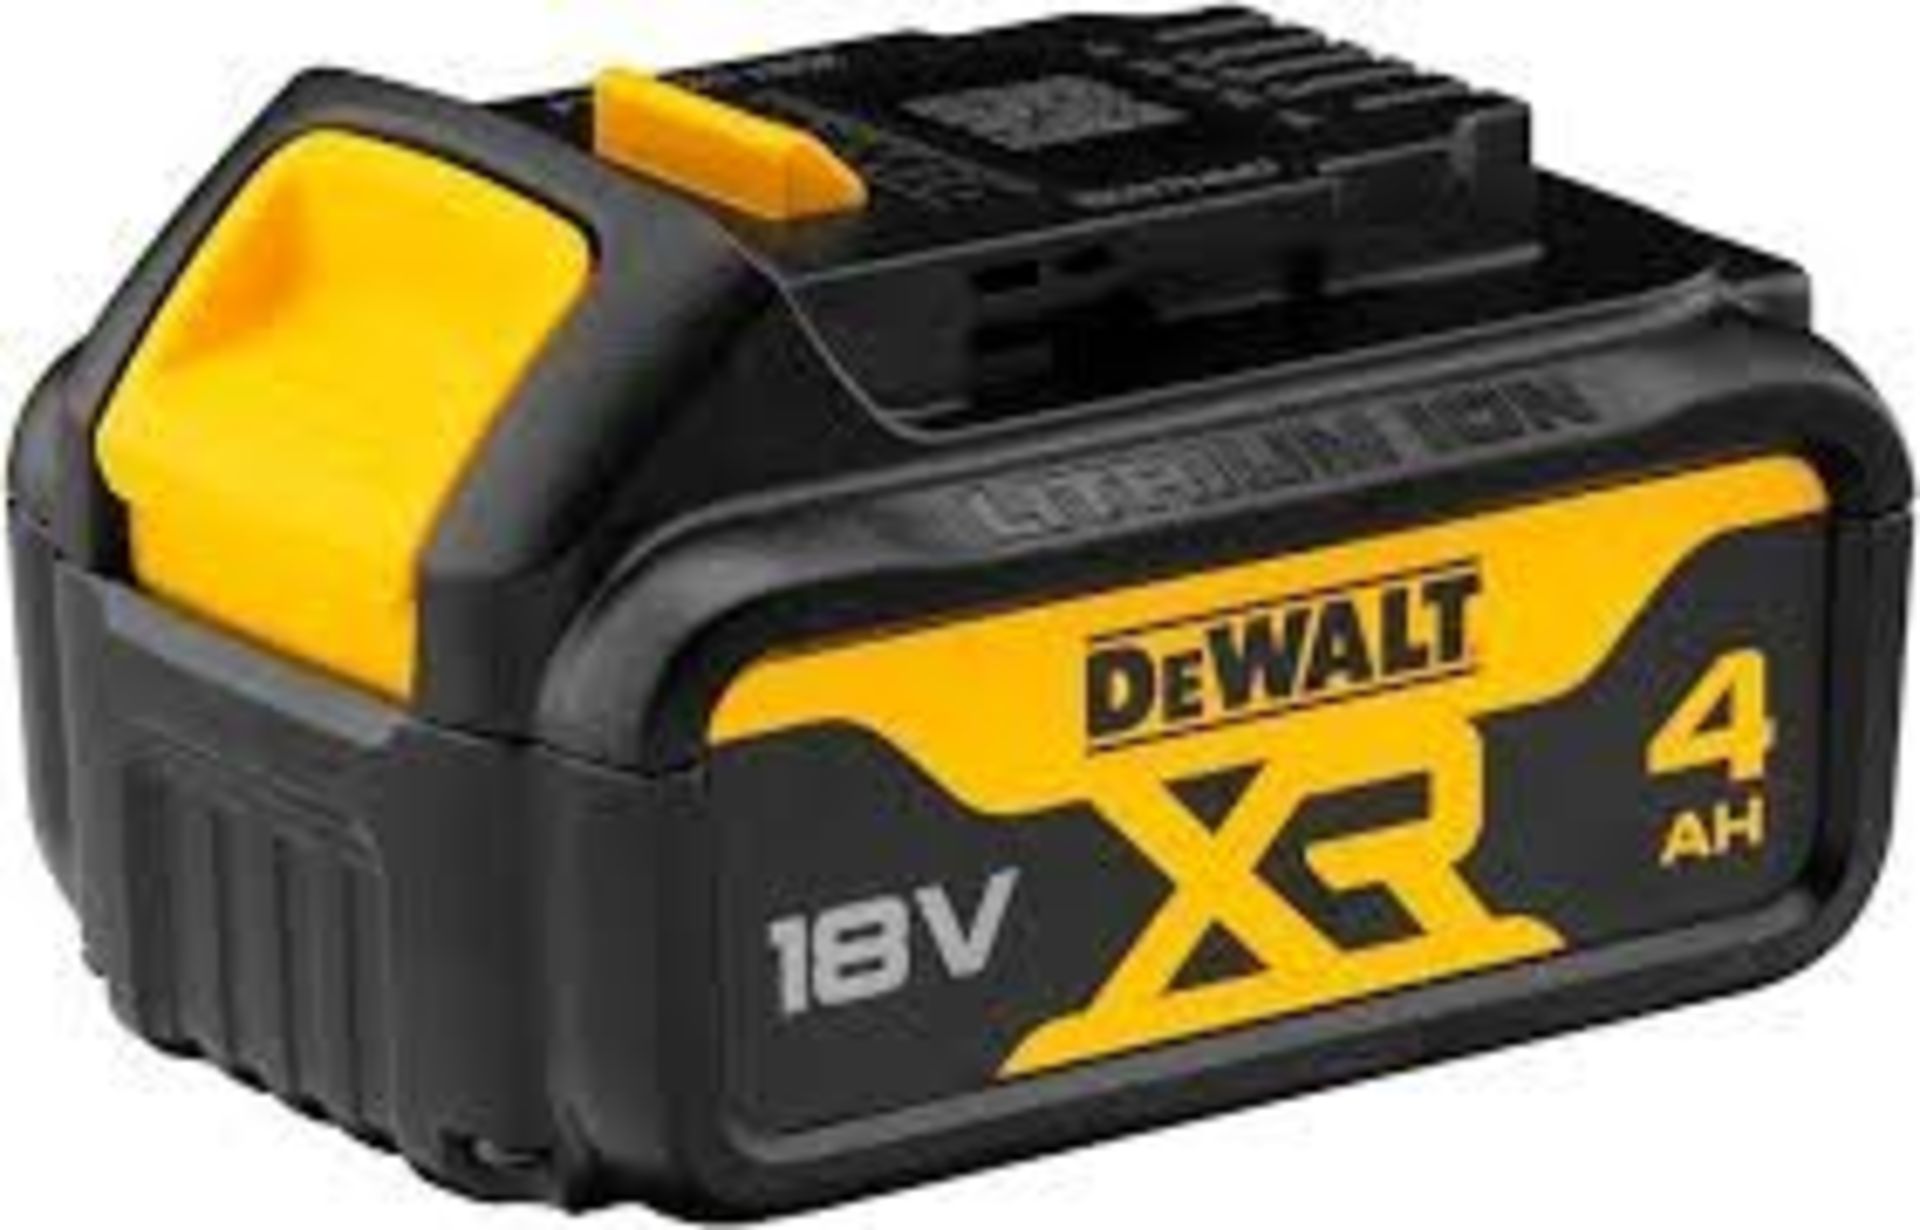 DEWALT DCB182-XJ 18V XR Lithium-Ion Battery, Black/Yellow. - S2.15.